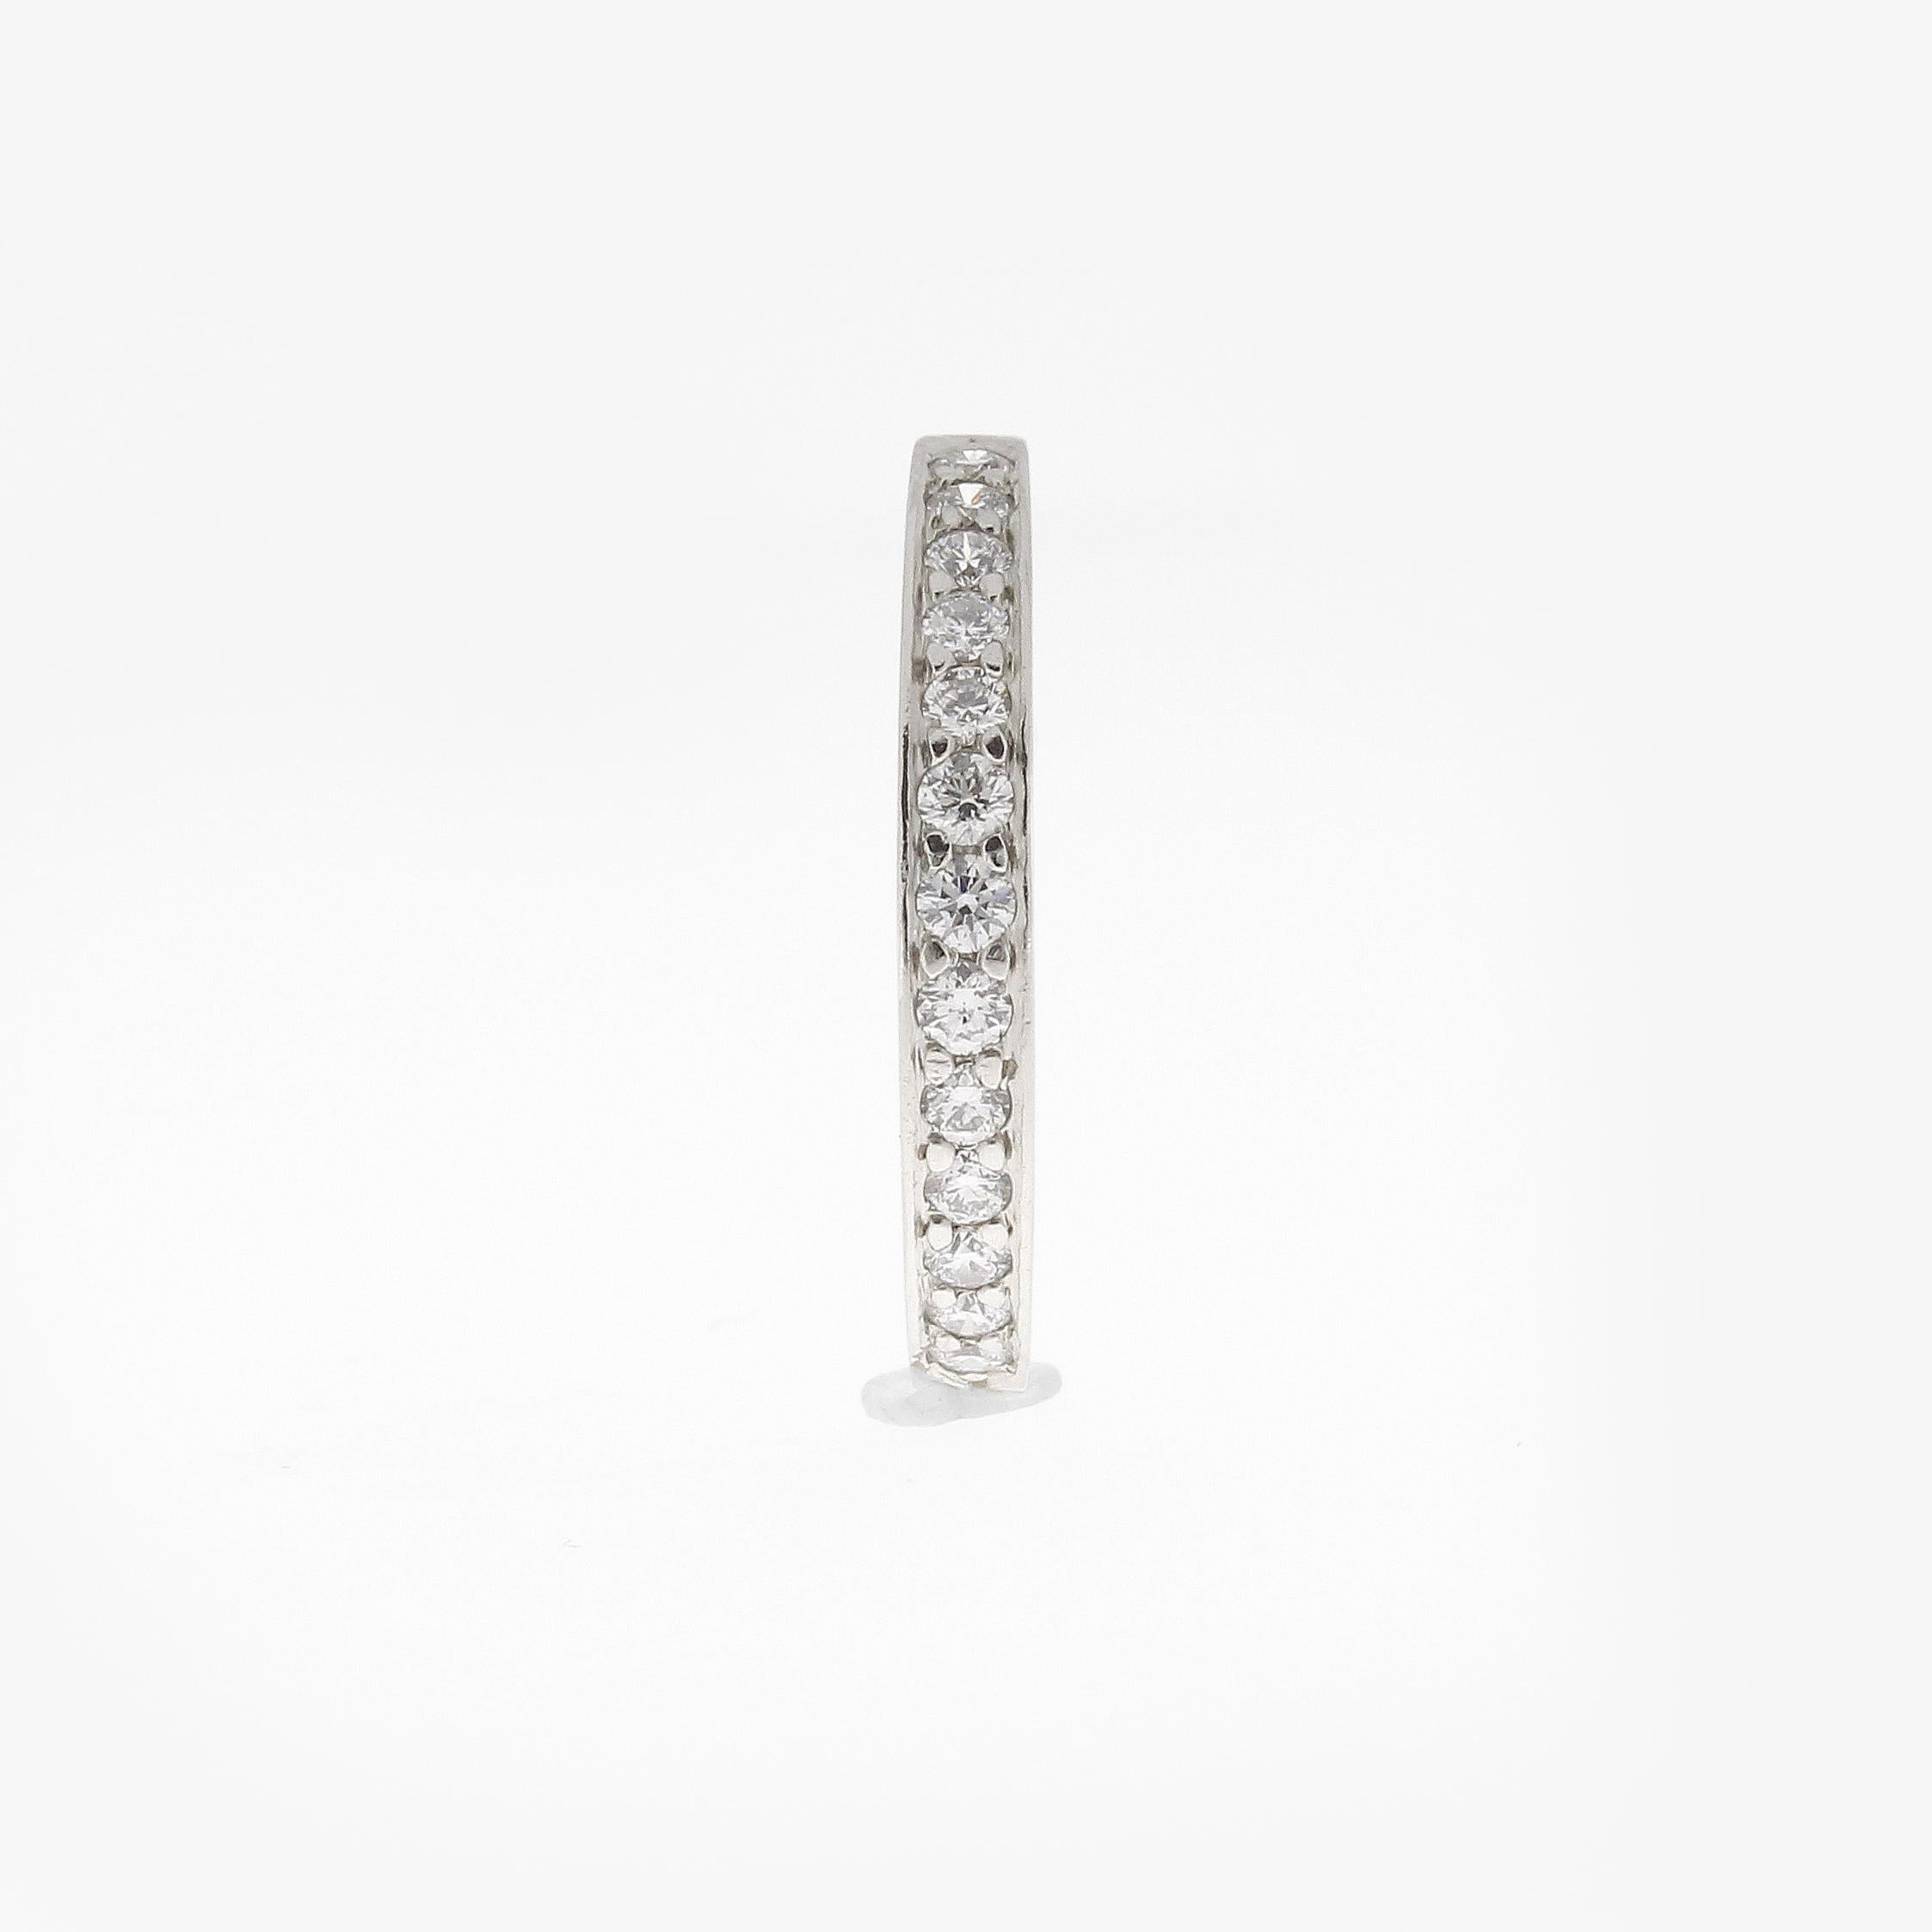 Platinum Tiffany Half Eternity Band Bridal Ring with 13 Brilliant Cut Diamonds - 0.33 Carat
Width: 3mm
Size: 51